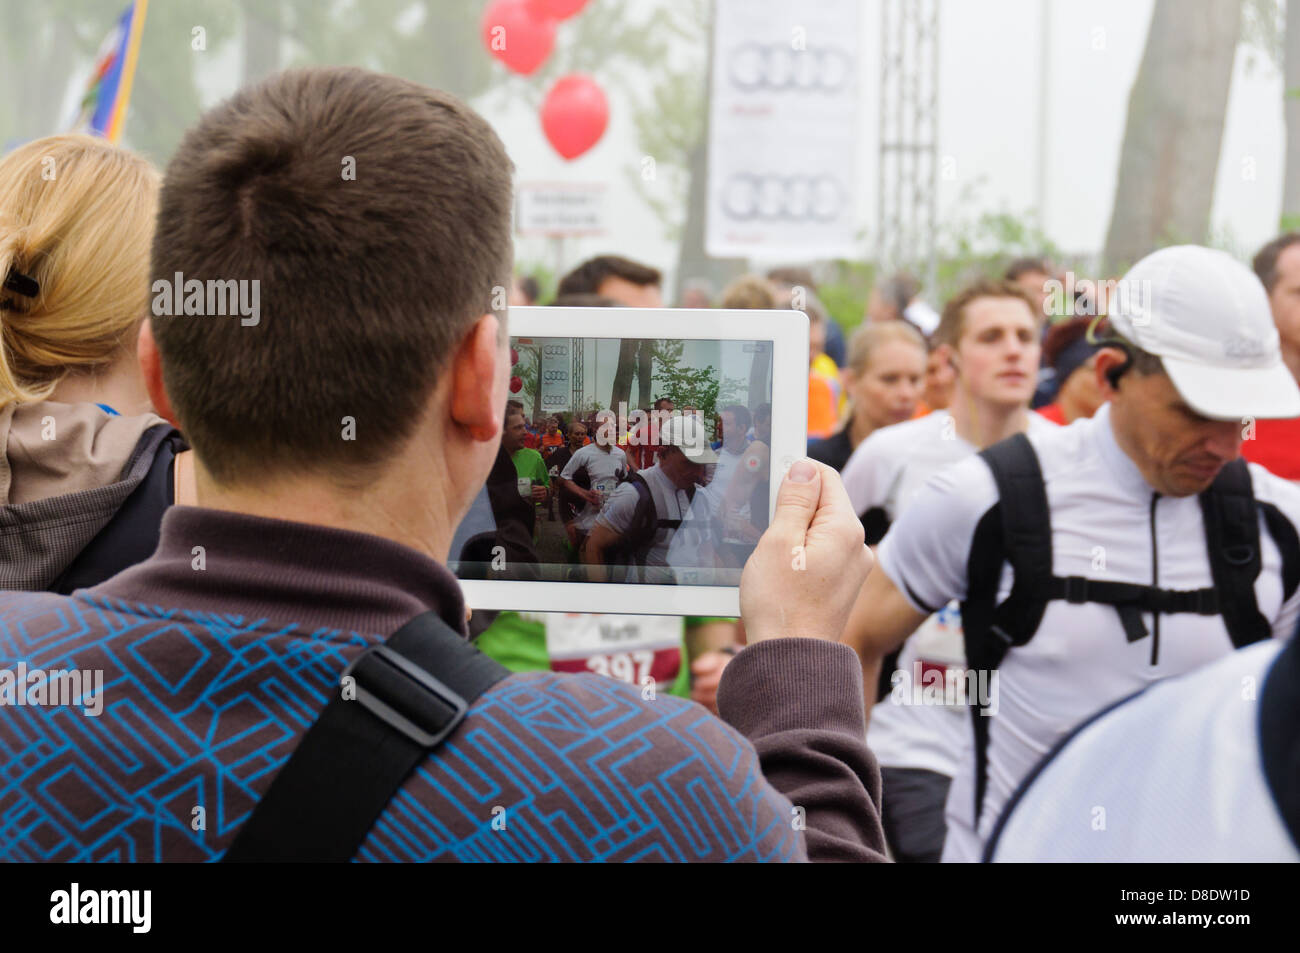 Man with an Apple iPad films marathon runners at the annual Trollinger-Marathon in Heilbronn, Germany Stock Photo